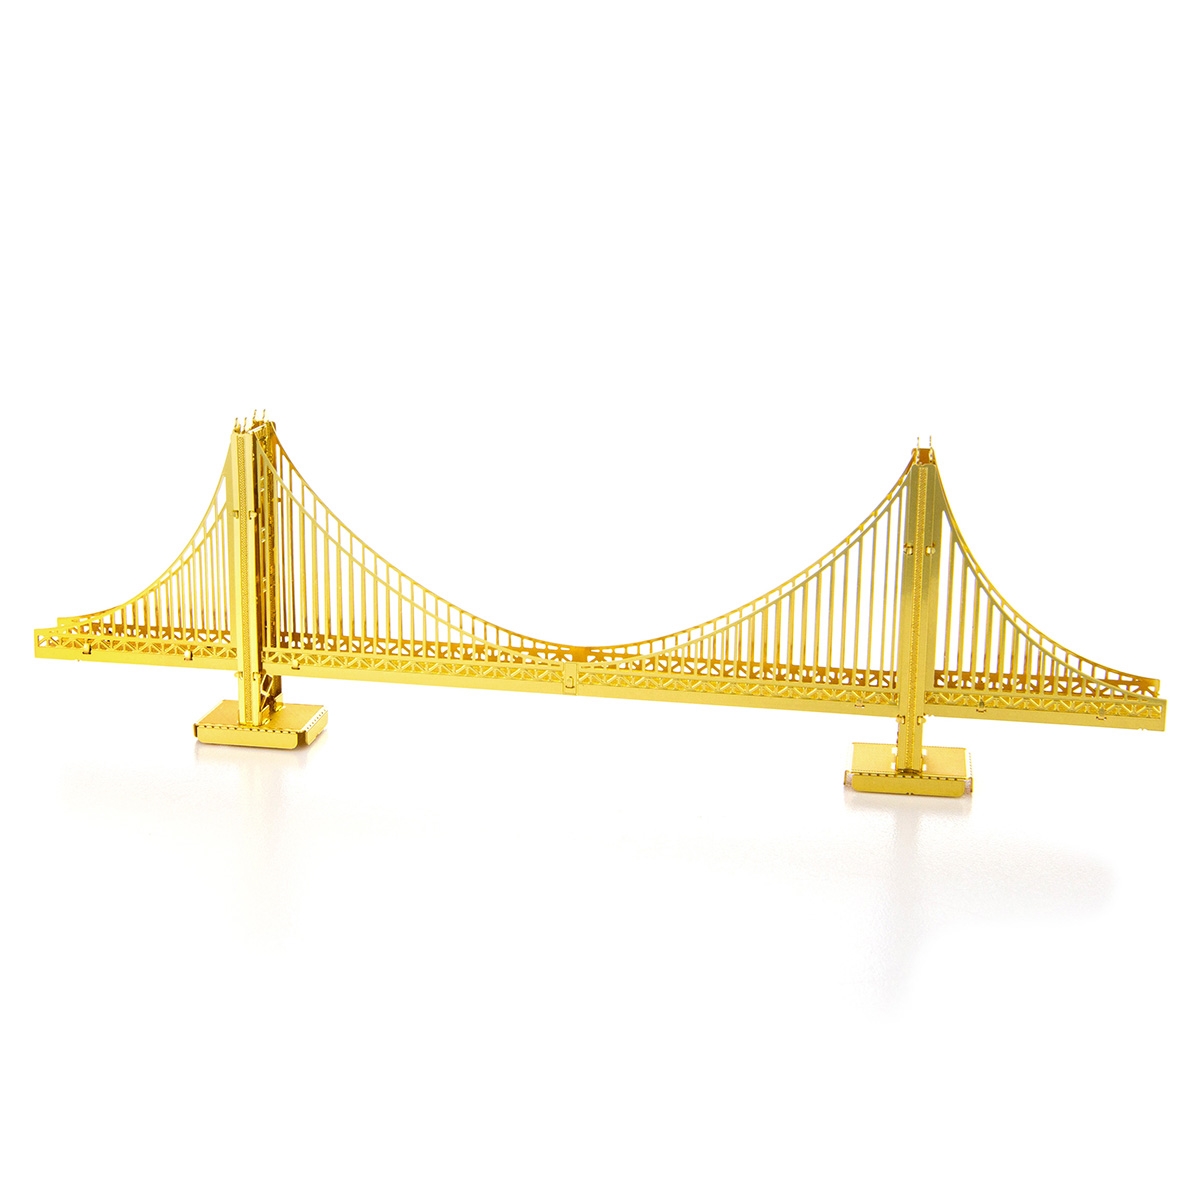 Gold Golden Gate Bridge Build Your Own DIY Model Kit Fun Assemble Metal Earth 